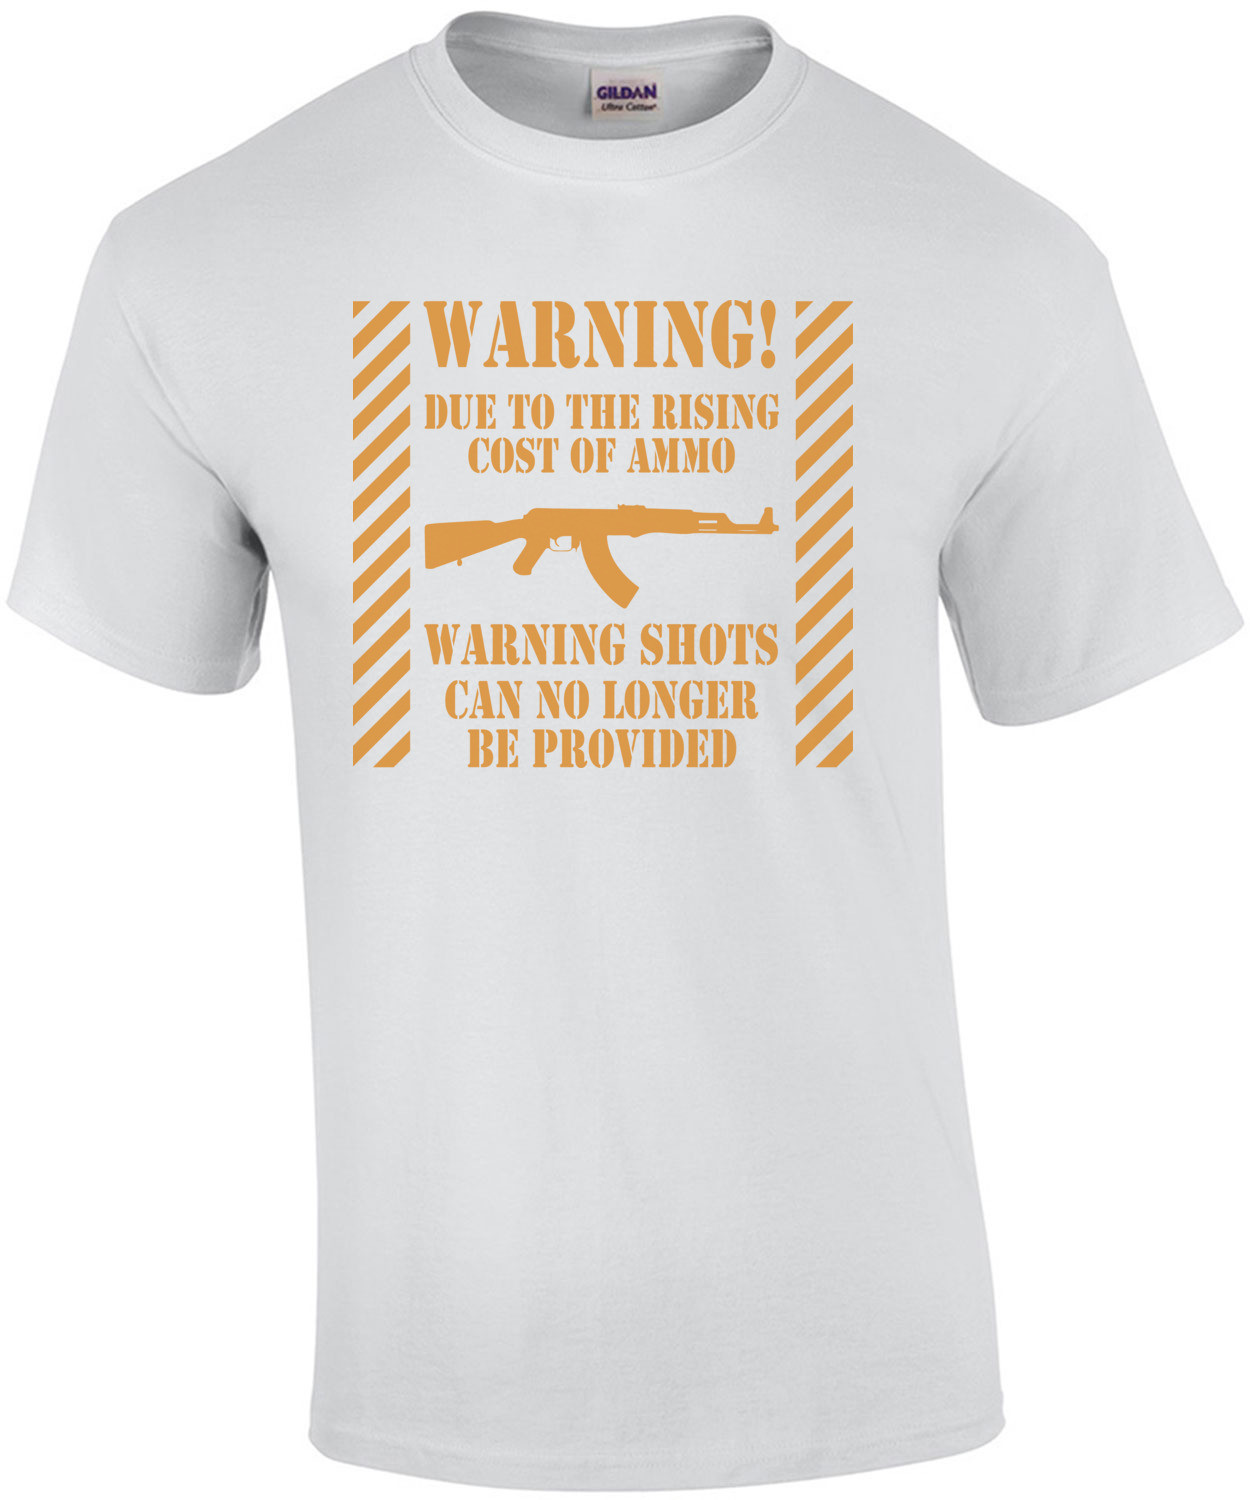 Warning! Due to the rising cost of ammo warning shots can no longer be provided - Gun T-Shirt